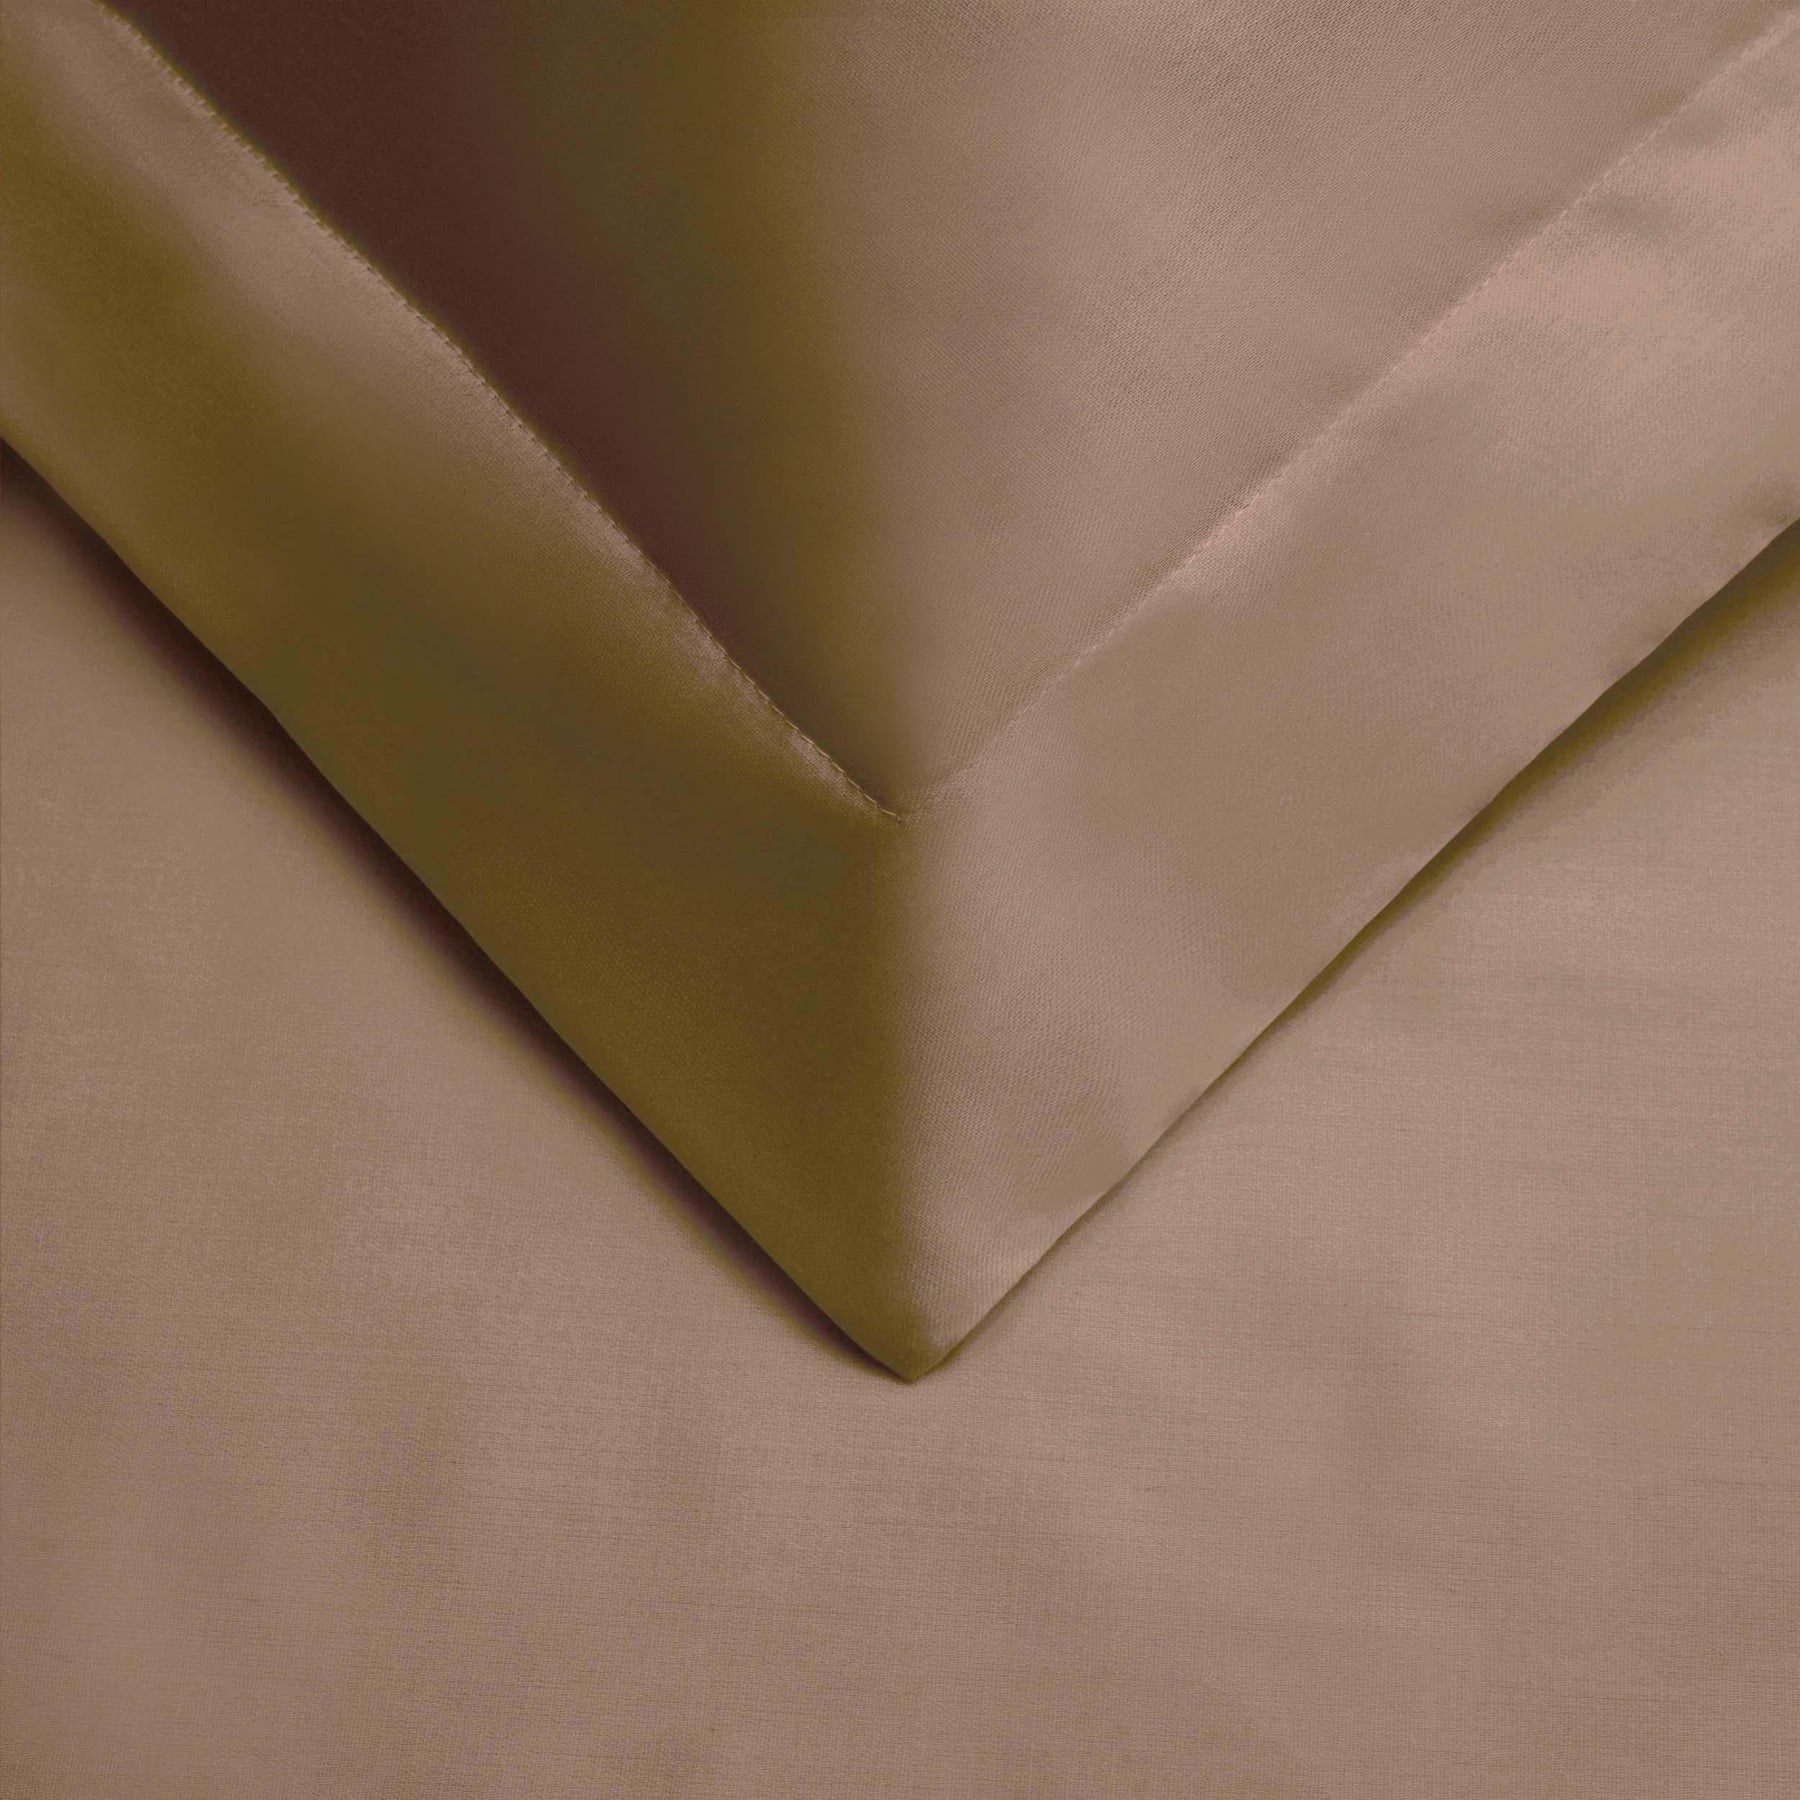  Superior Premium Egyptian Cotton 530 Thread Count Solid Duvet Cover Set -  Taupe